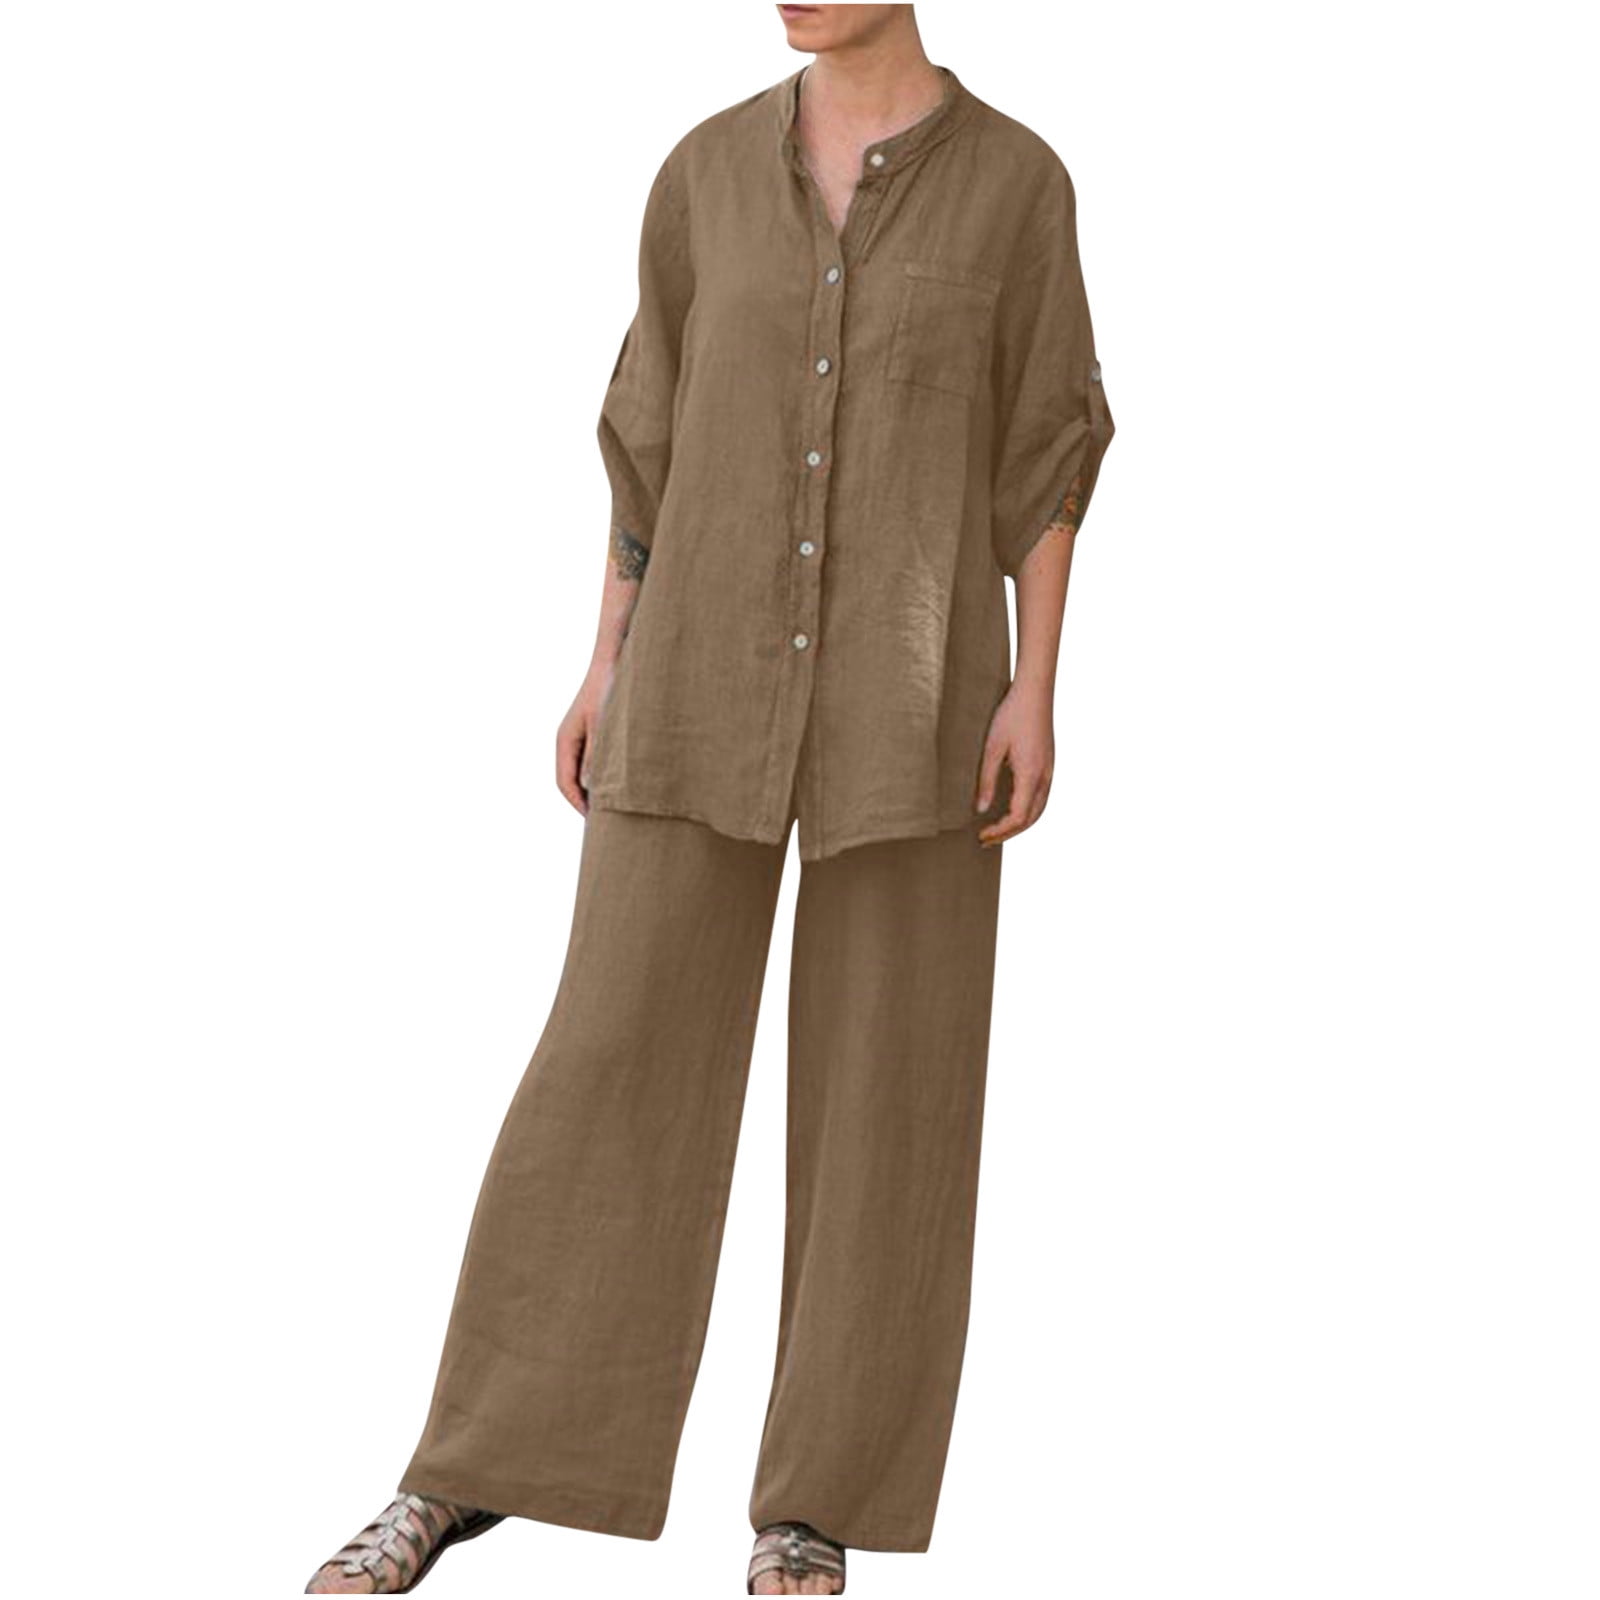 Plus Size Summer Outfits for Women Cotton Linen Pants Set 2 Piece Casual  Tops and Wide Leg Pants Two Piece Beach Sets 